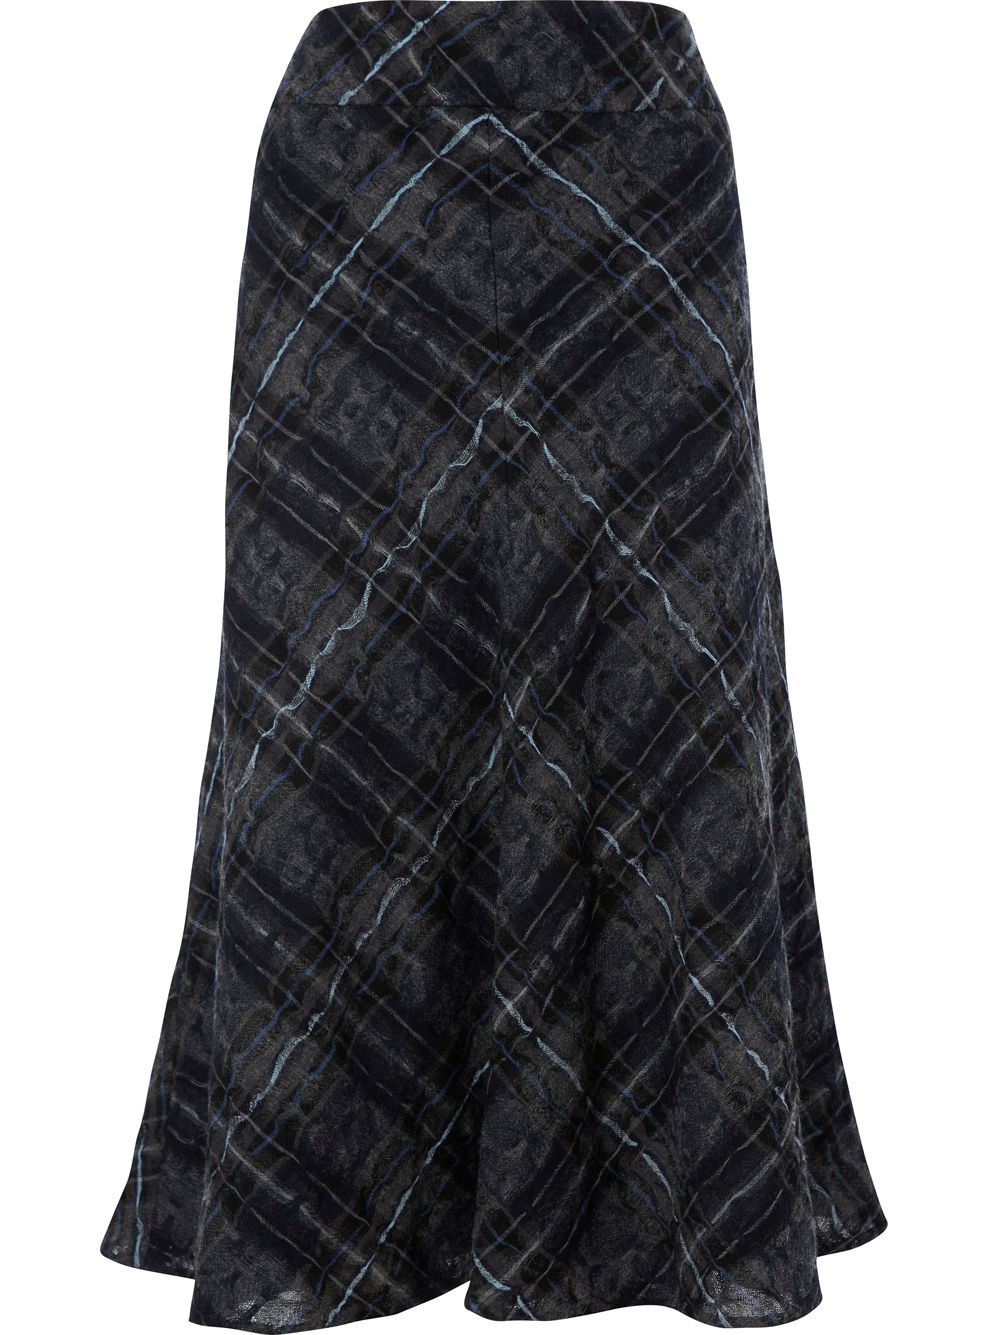 Viyella Petite Gauzy Check Wool Skirt, Sapphire at John Lewis